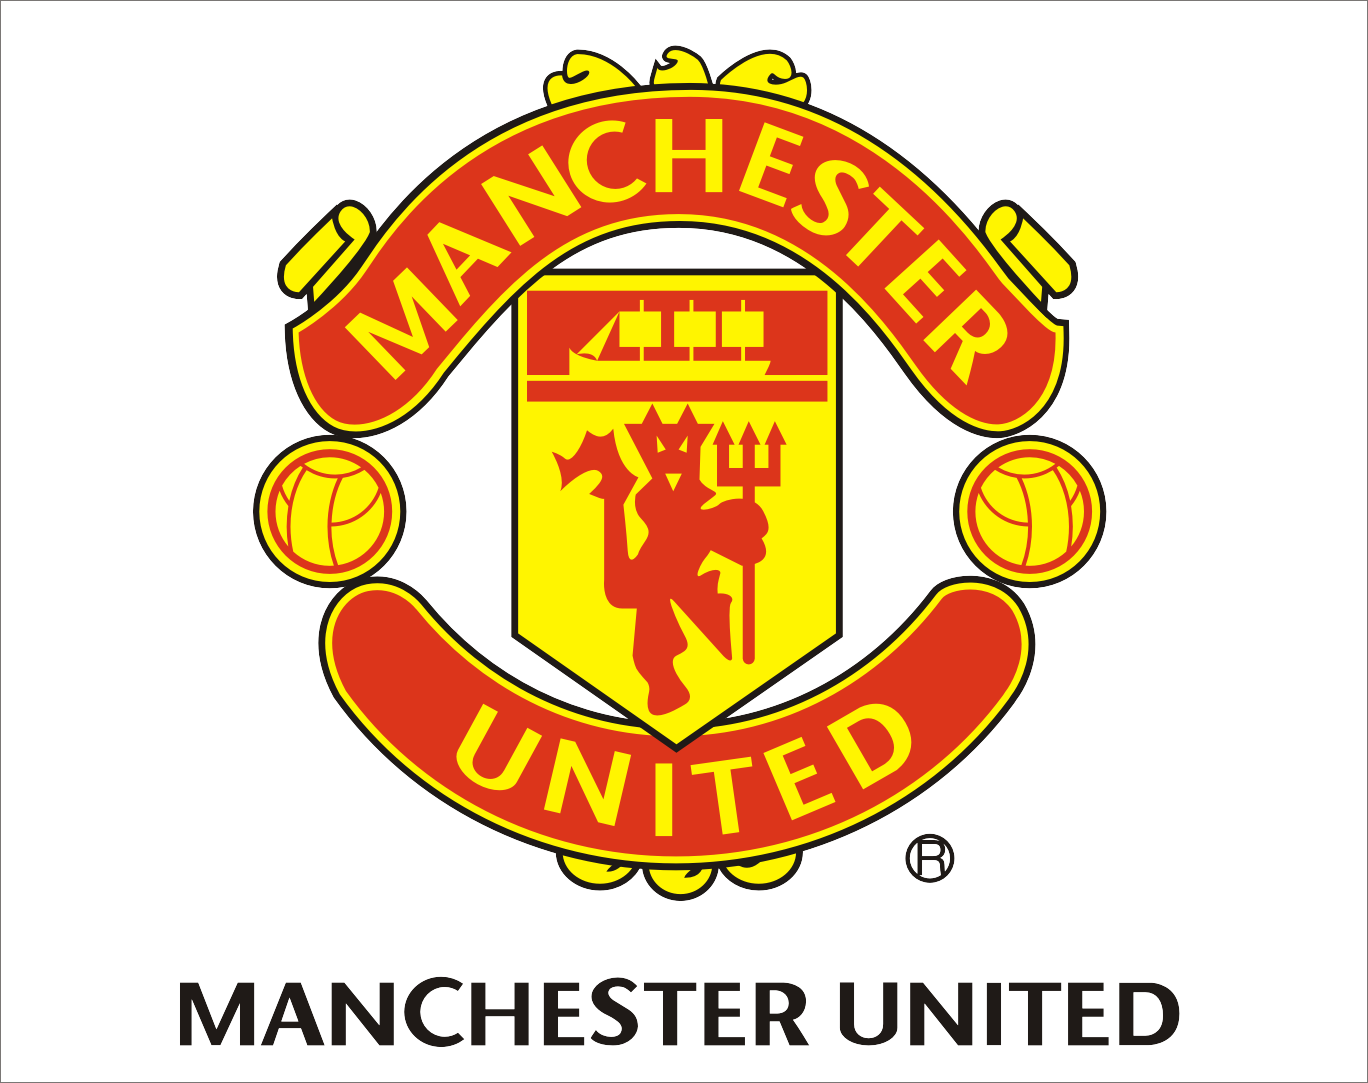 Manchester United crest bootanimation 2 by DiwakarSarode on DeviantArt